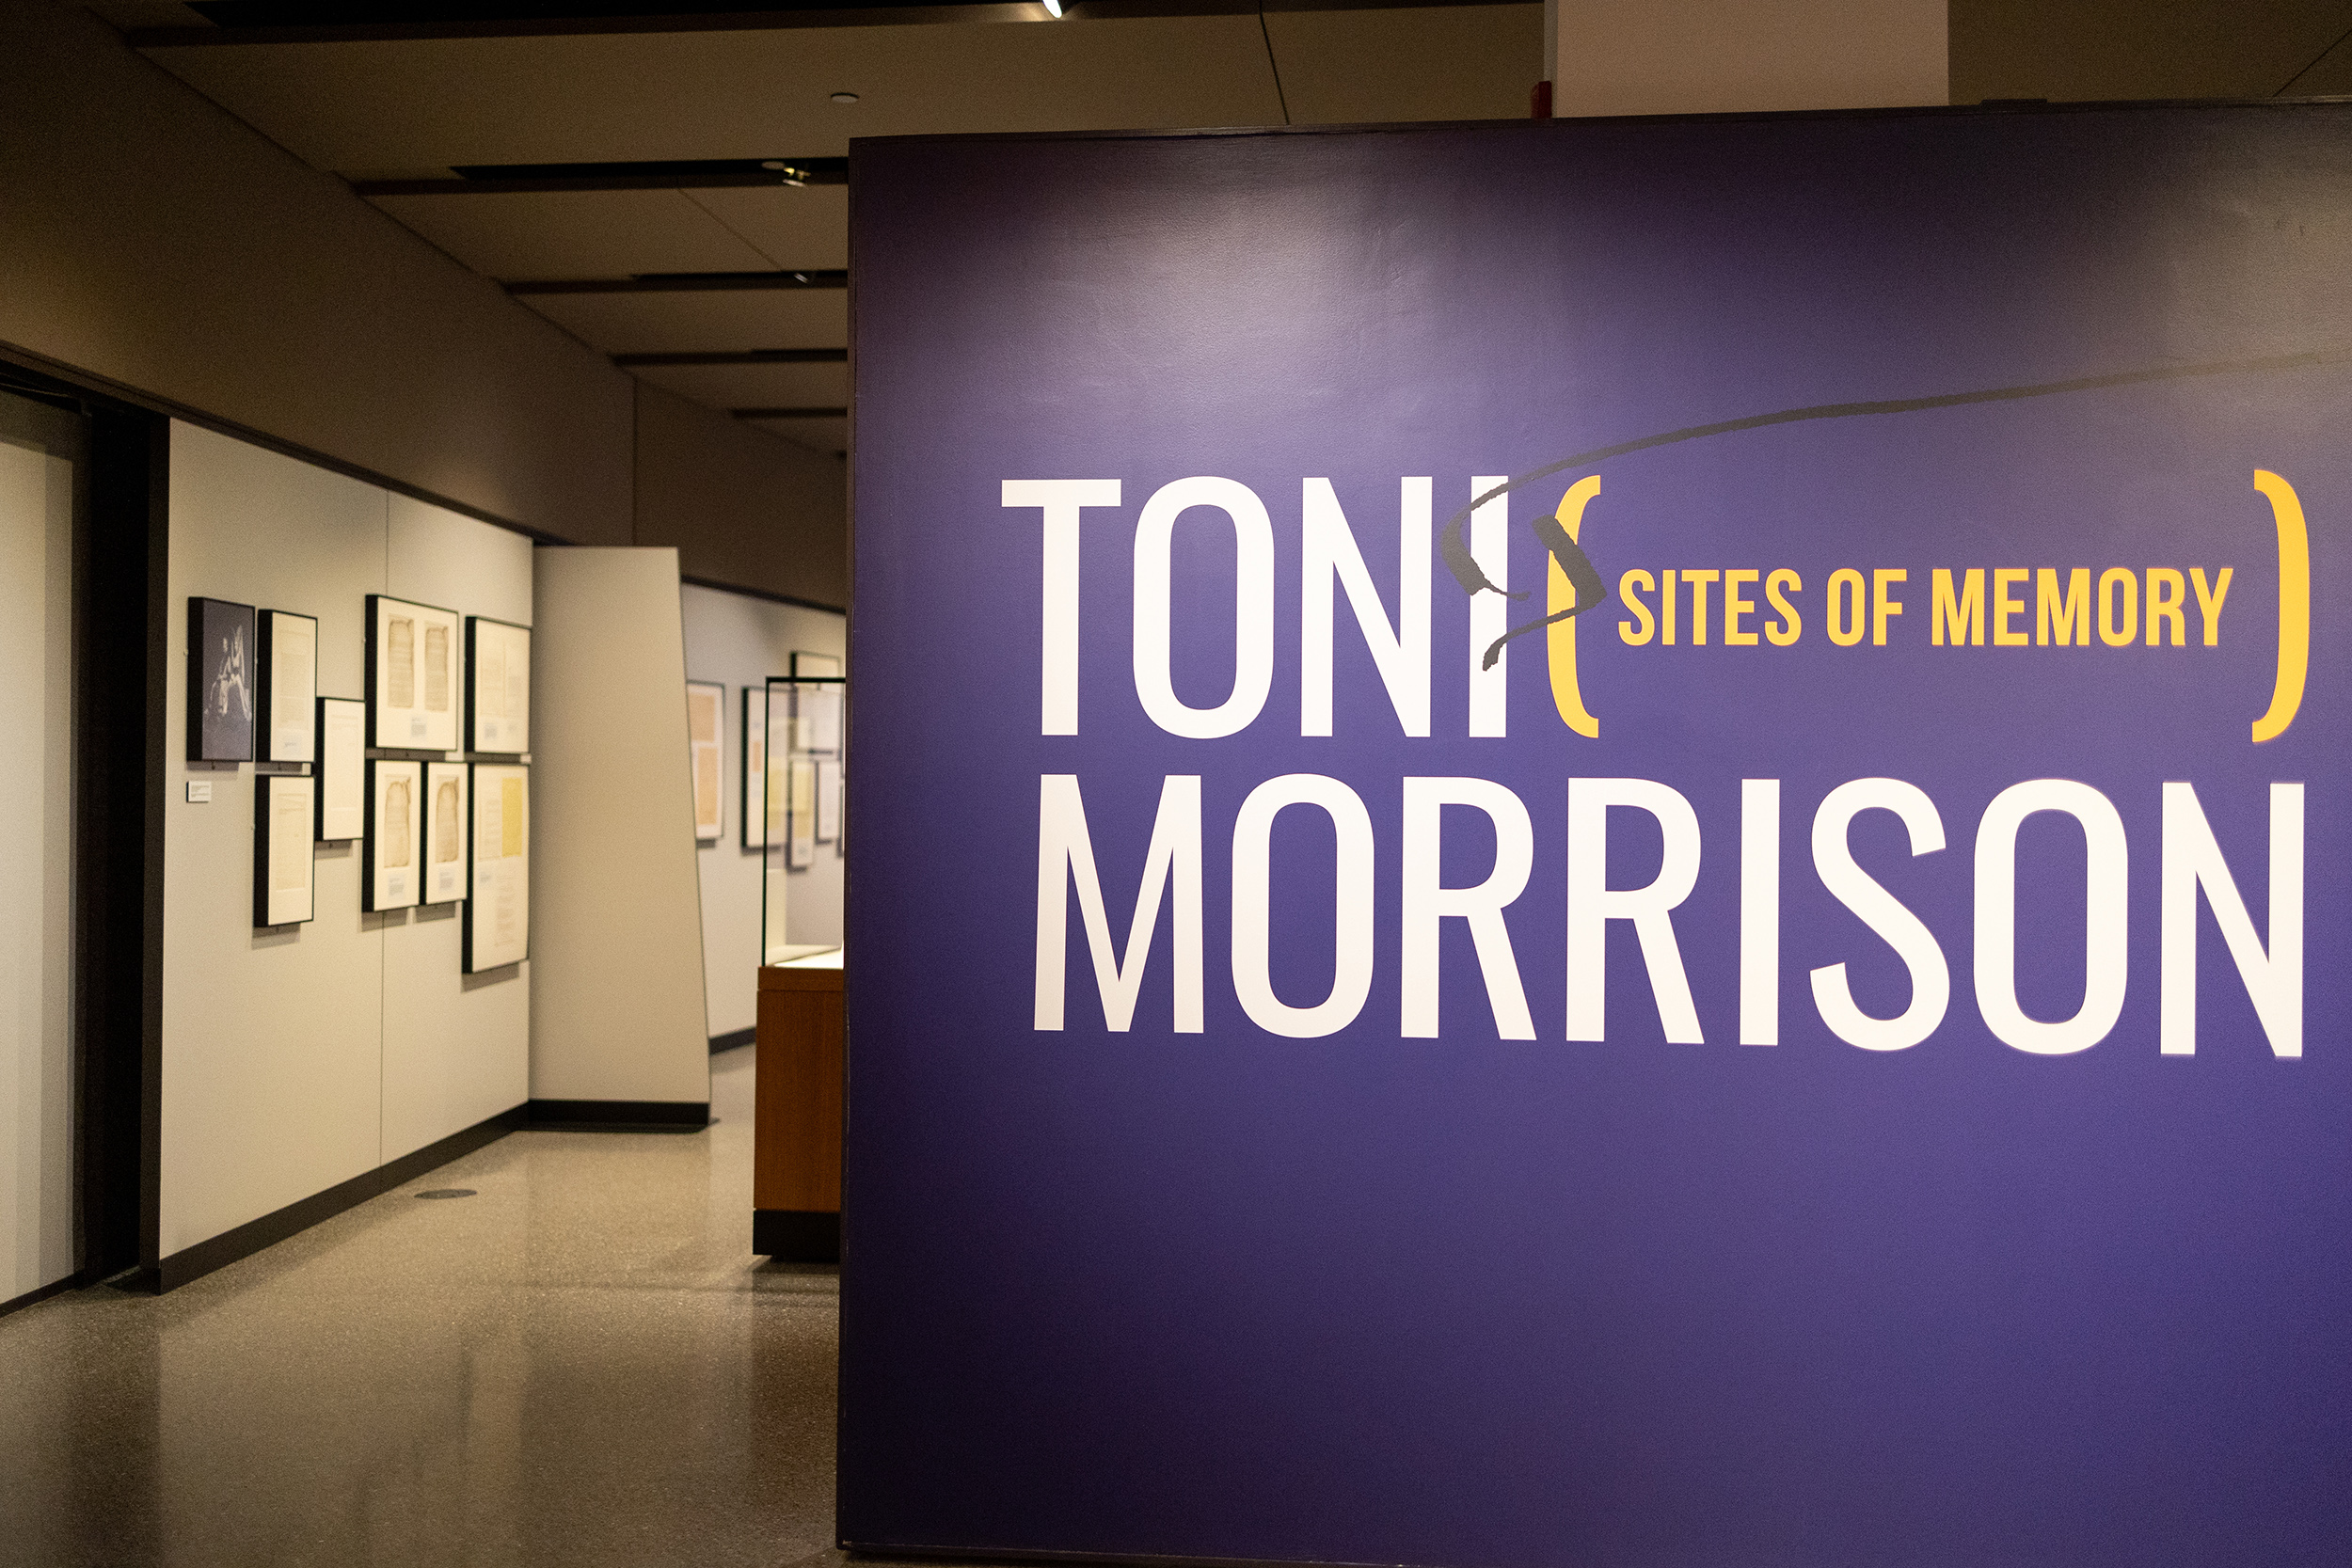 toni morrison the site of memory essay